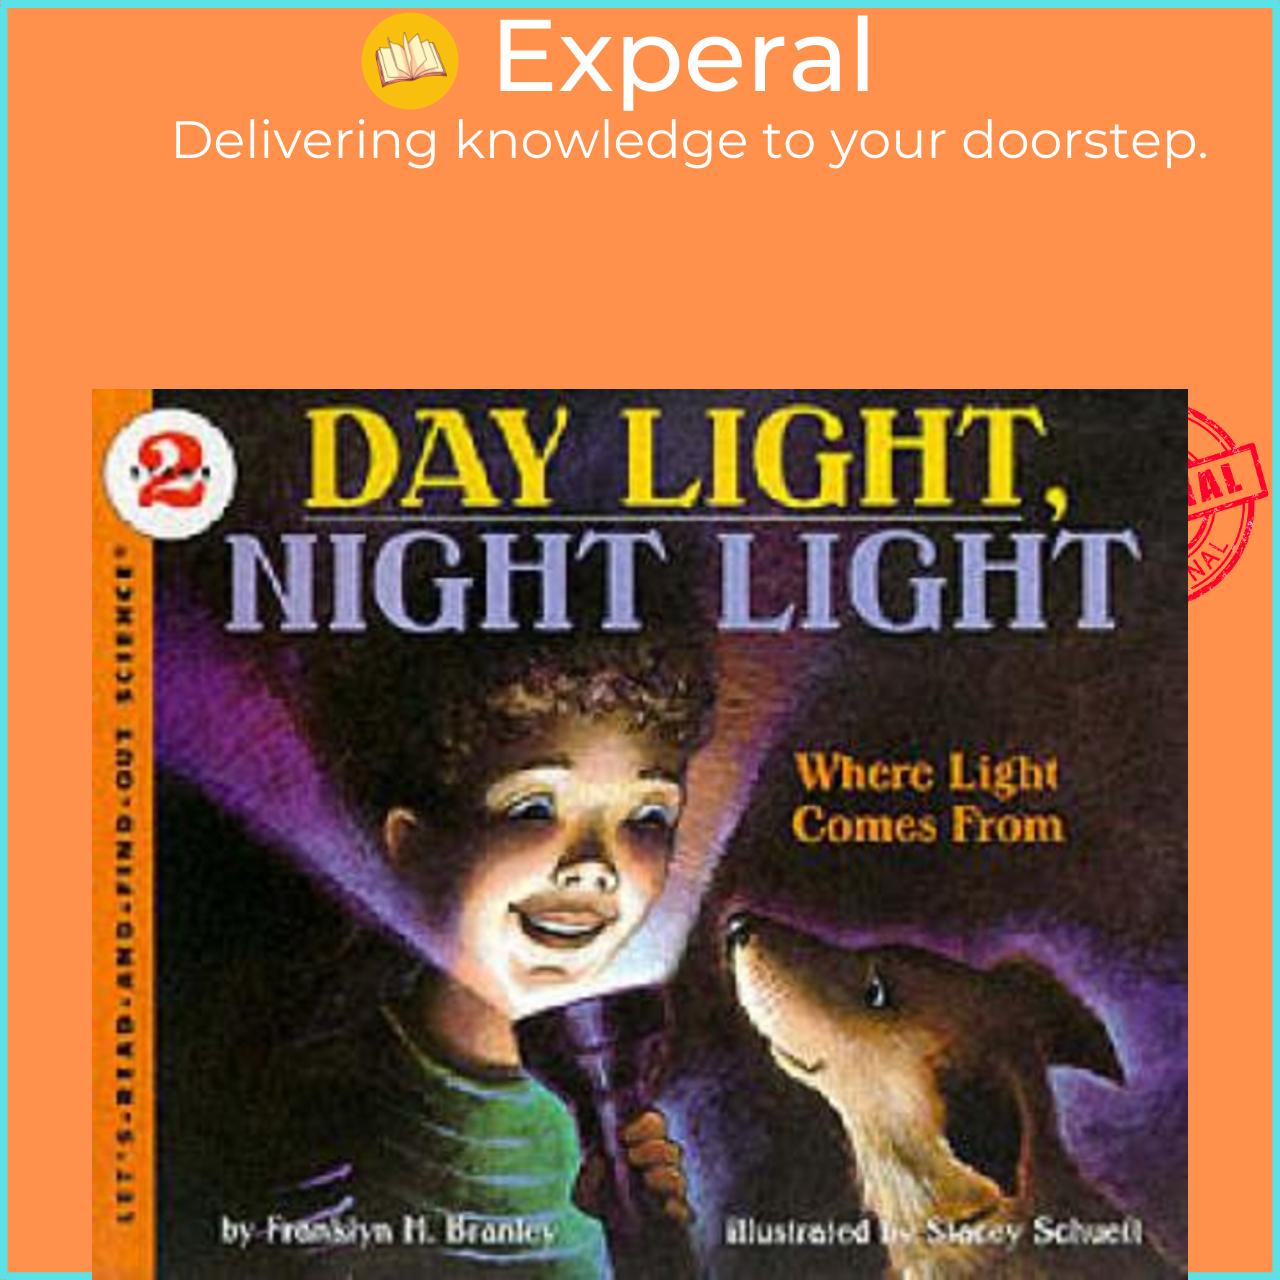 Sách - Day Light, Night Light by Dr. Franklyn M. Branley (US edition, paperback)